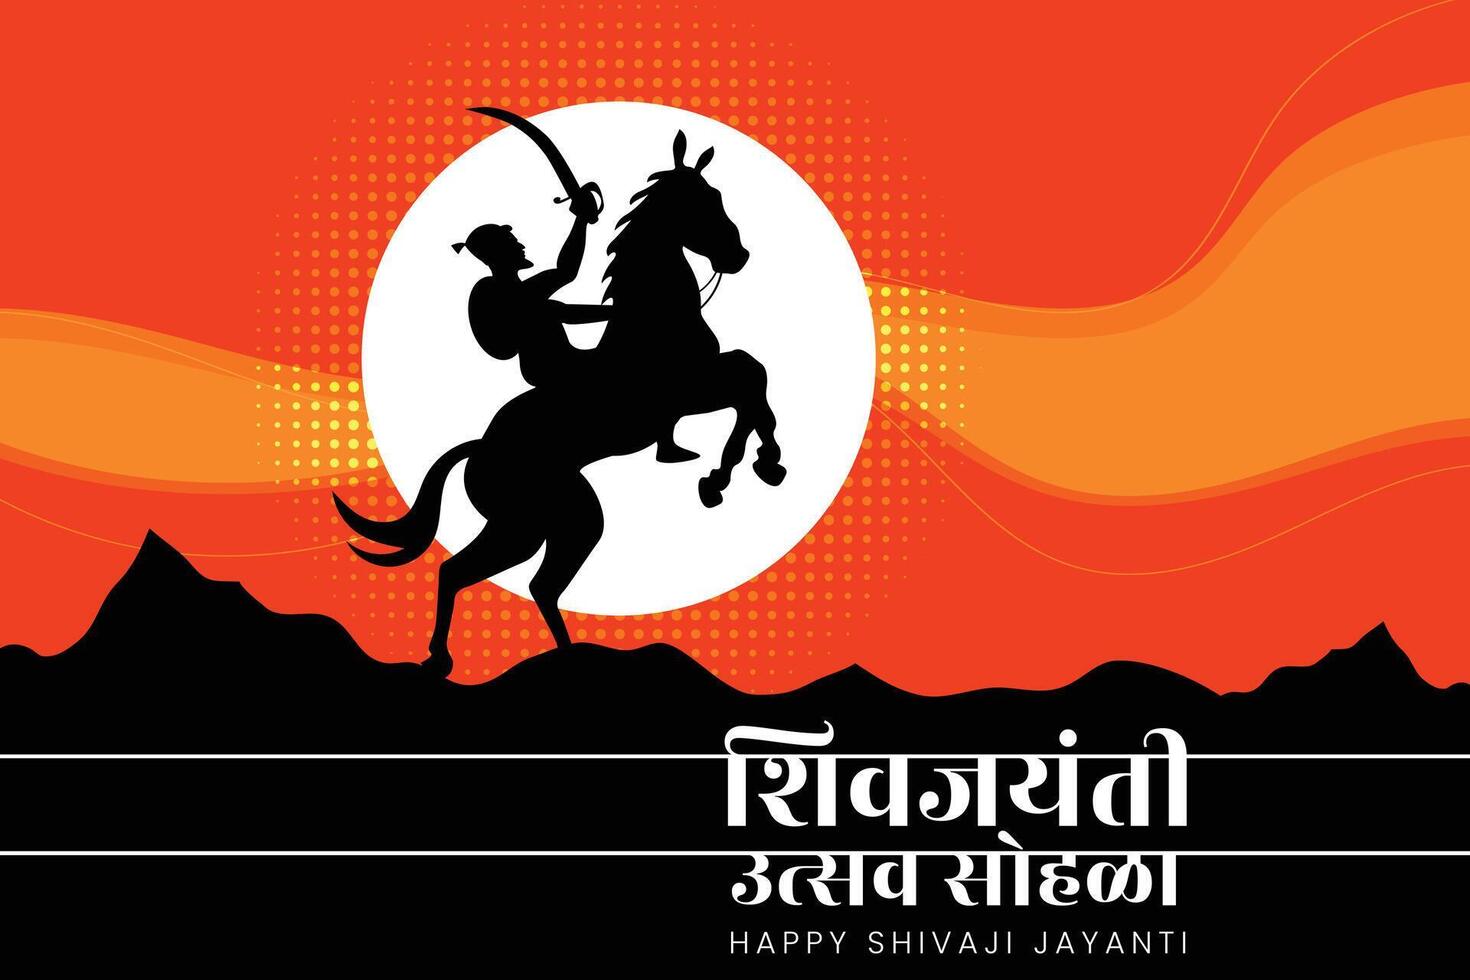 chhatrapati shivaji maharaj Jayanti saludo, genial indio Maratha Rey vector